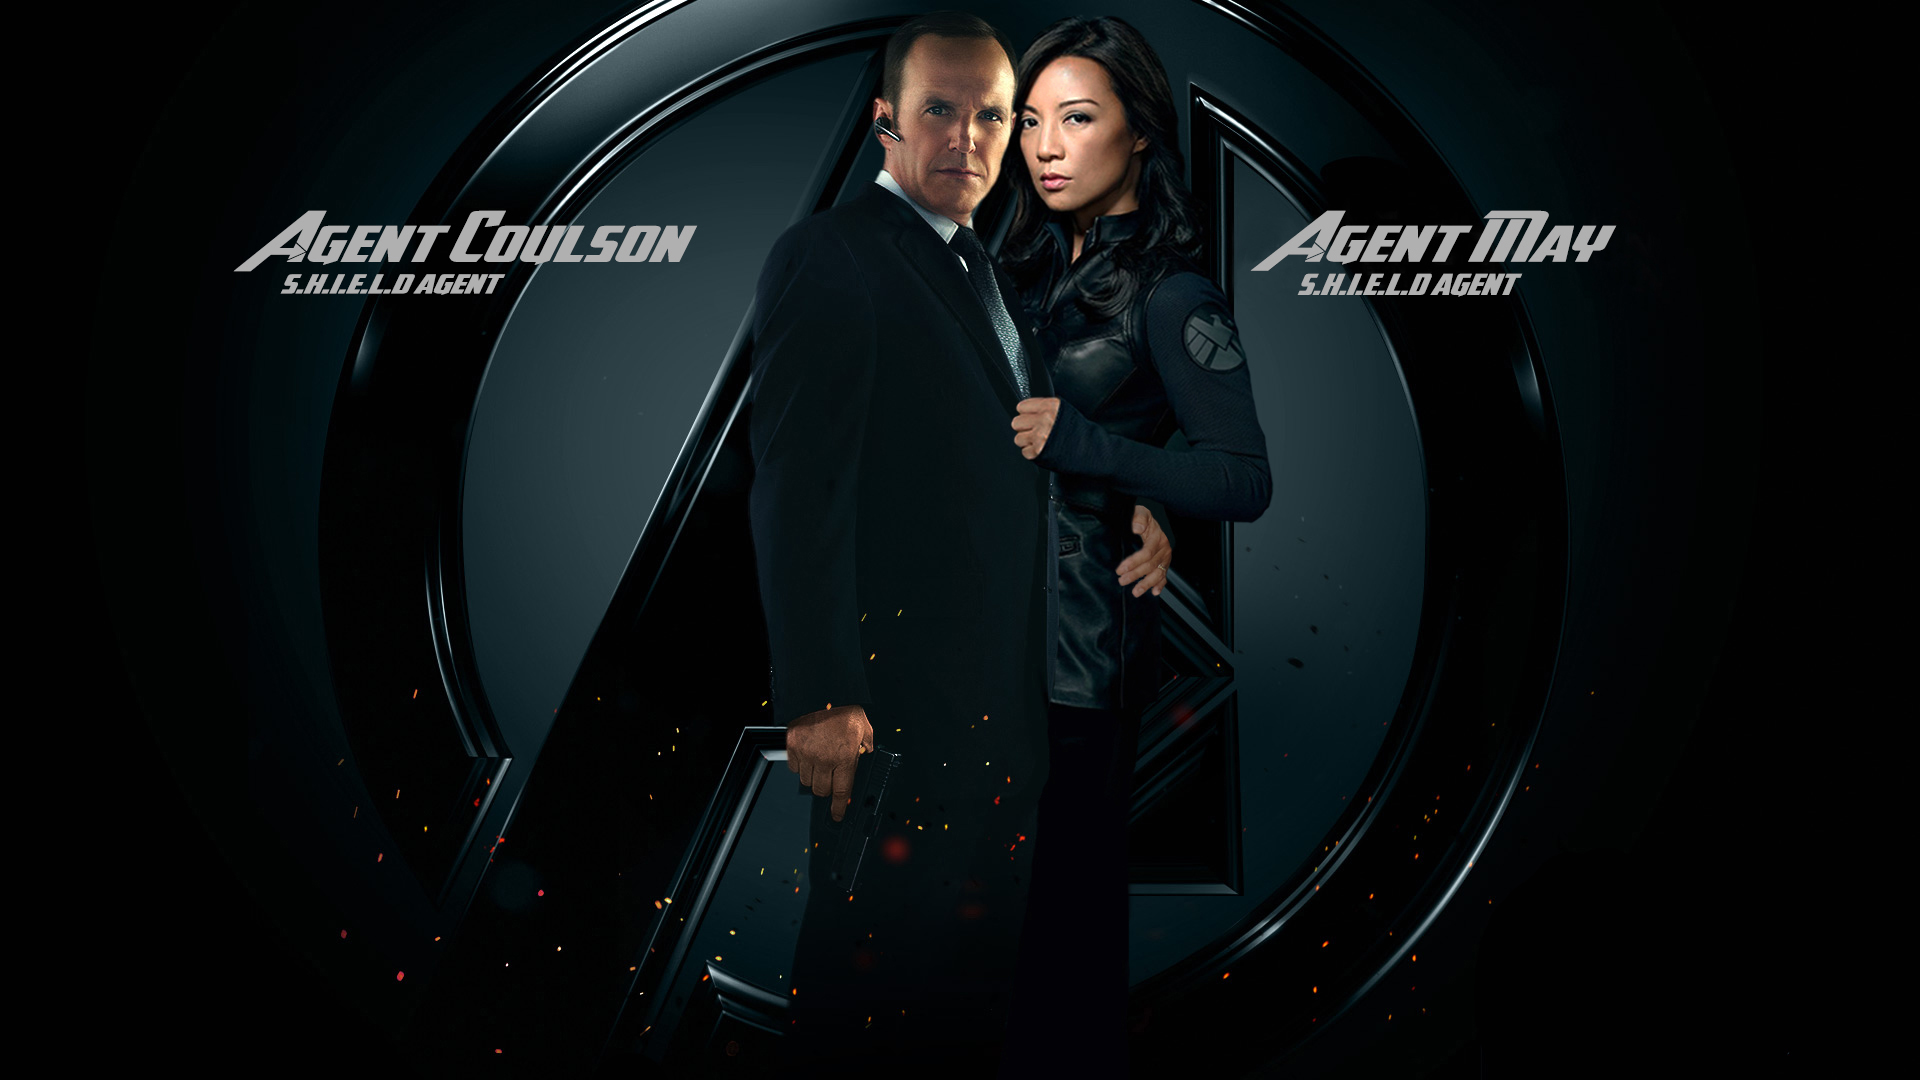 agent of shield season 1 download